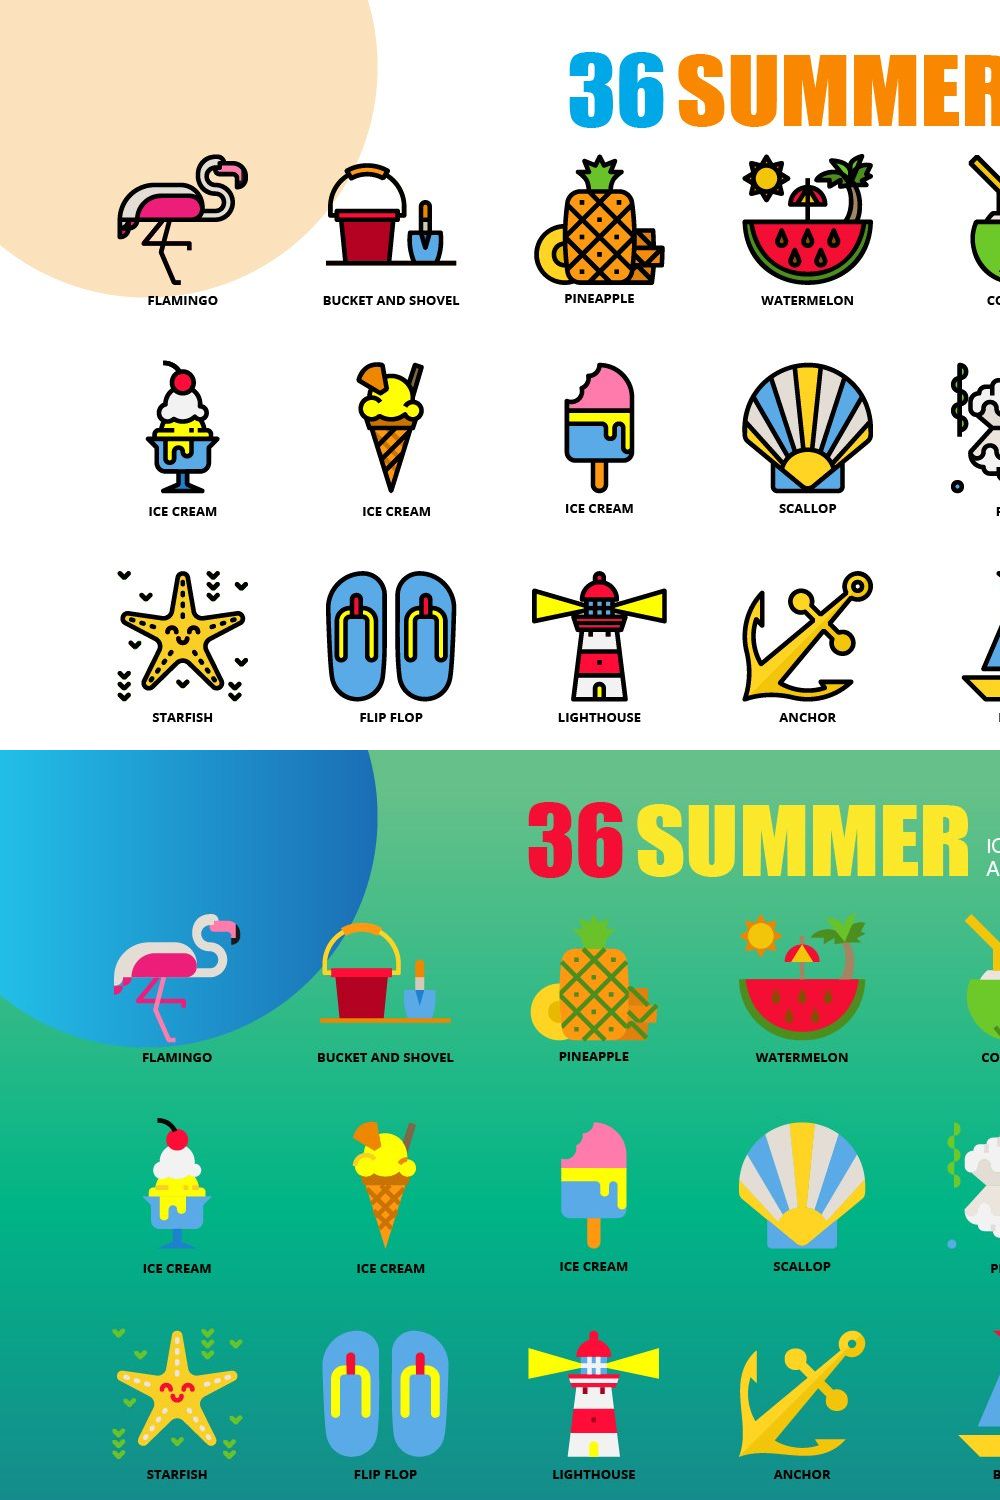 36 Summer icons set 3 style+1 Bonus pinterest preview image.